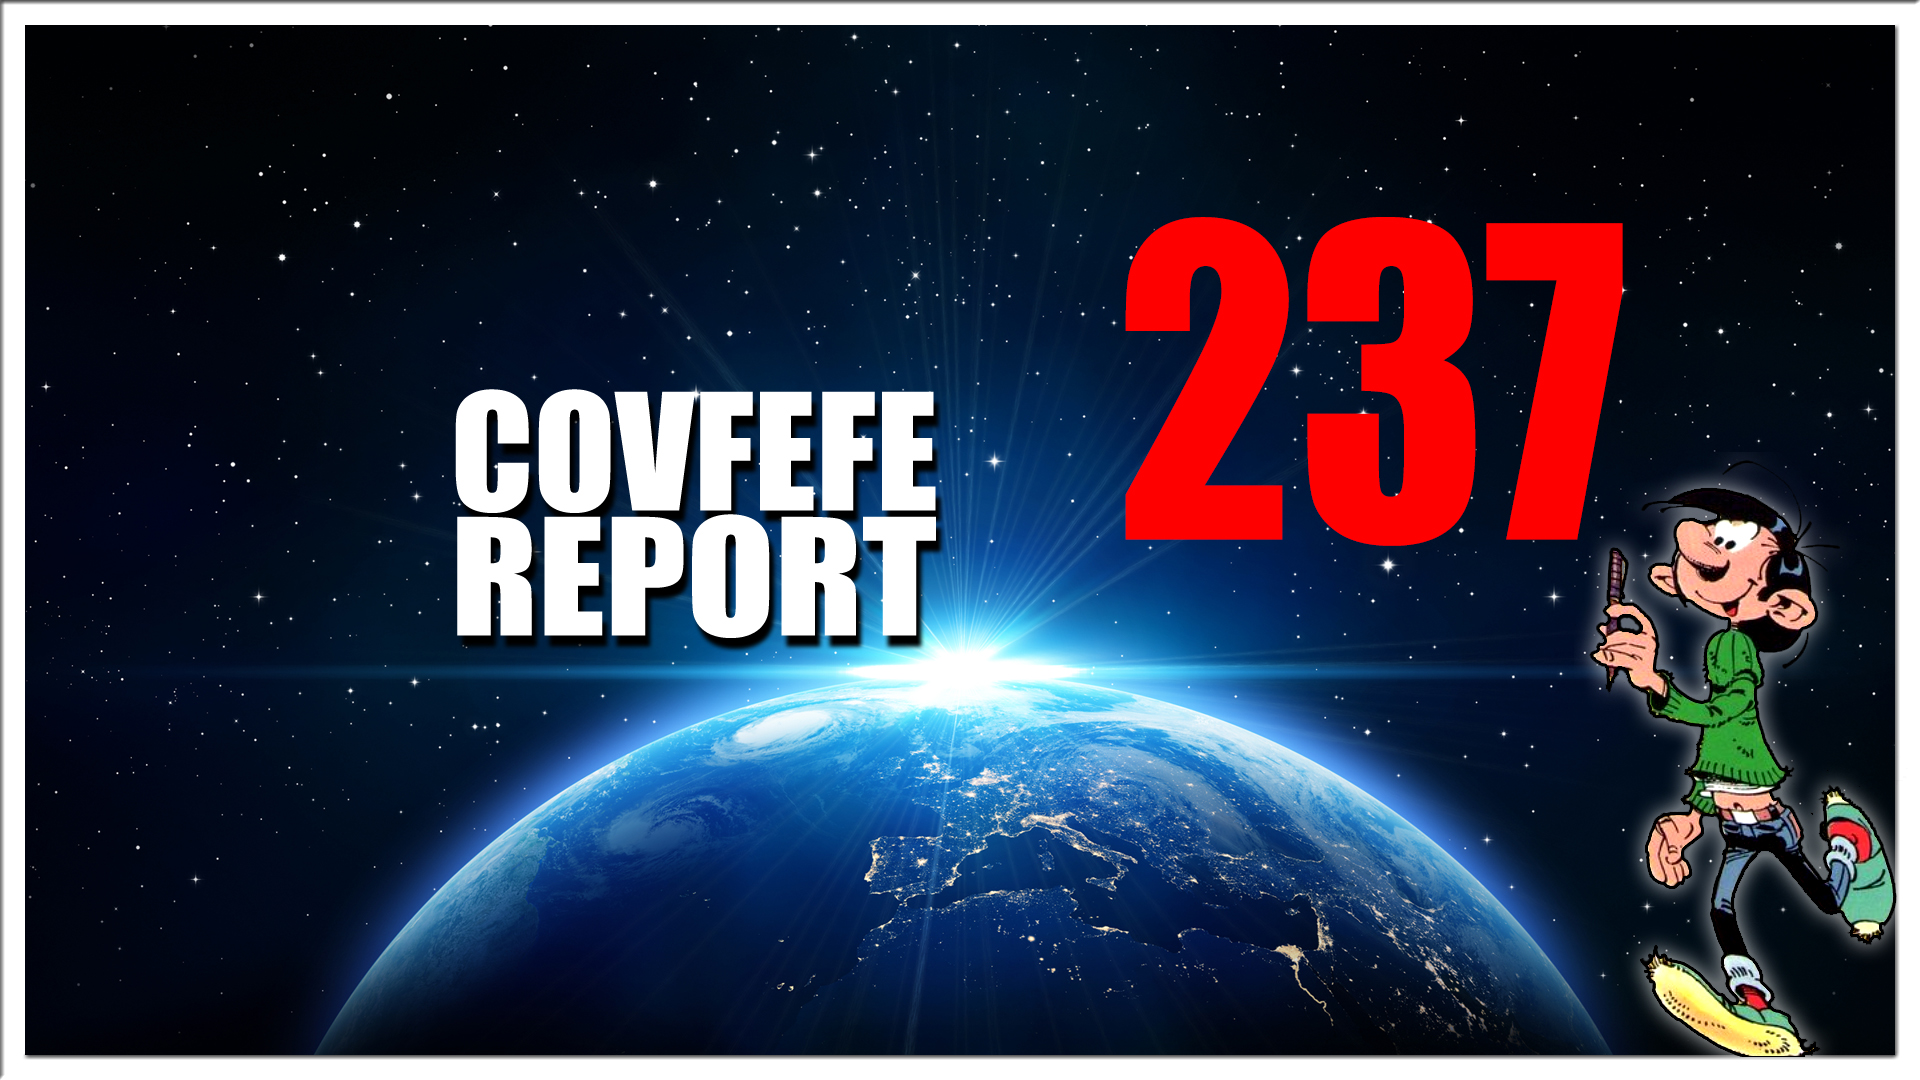 Covfefe Report 237. ngt